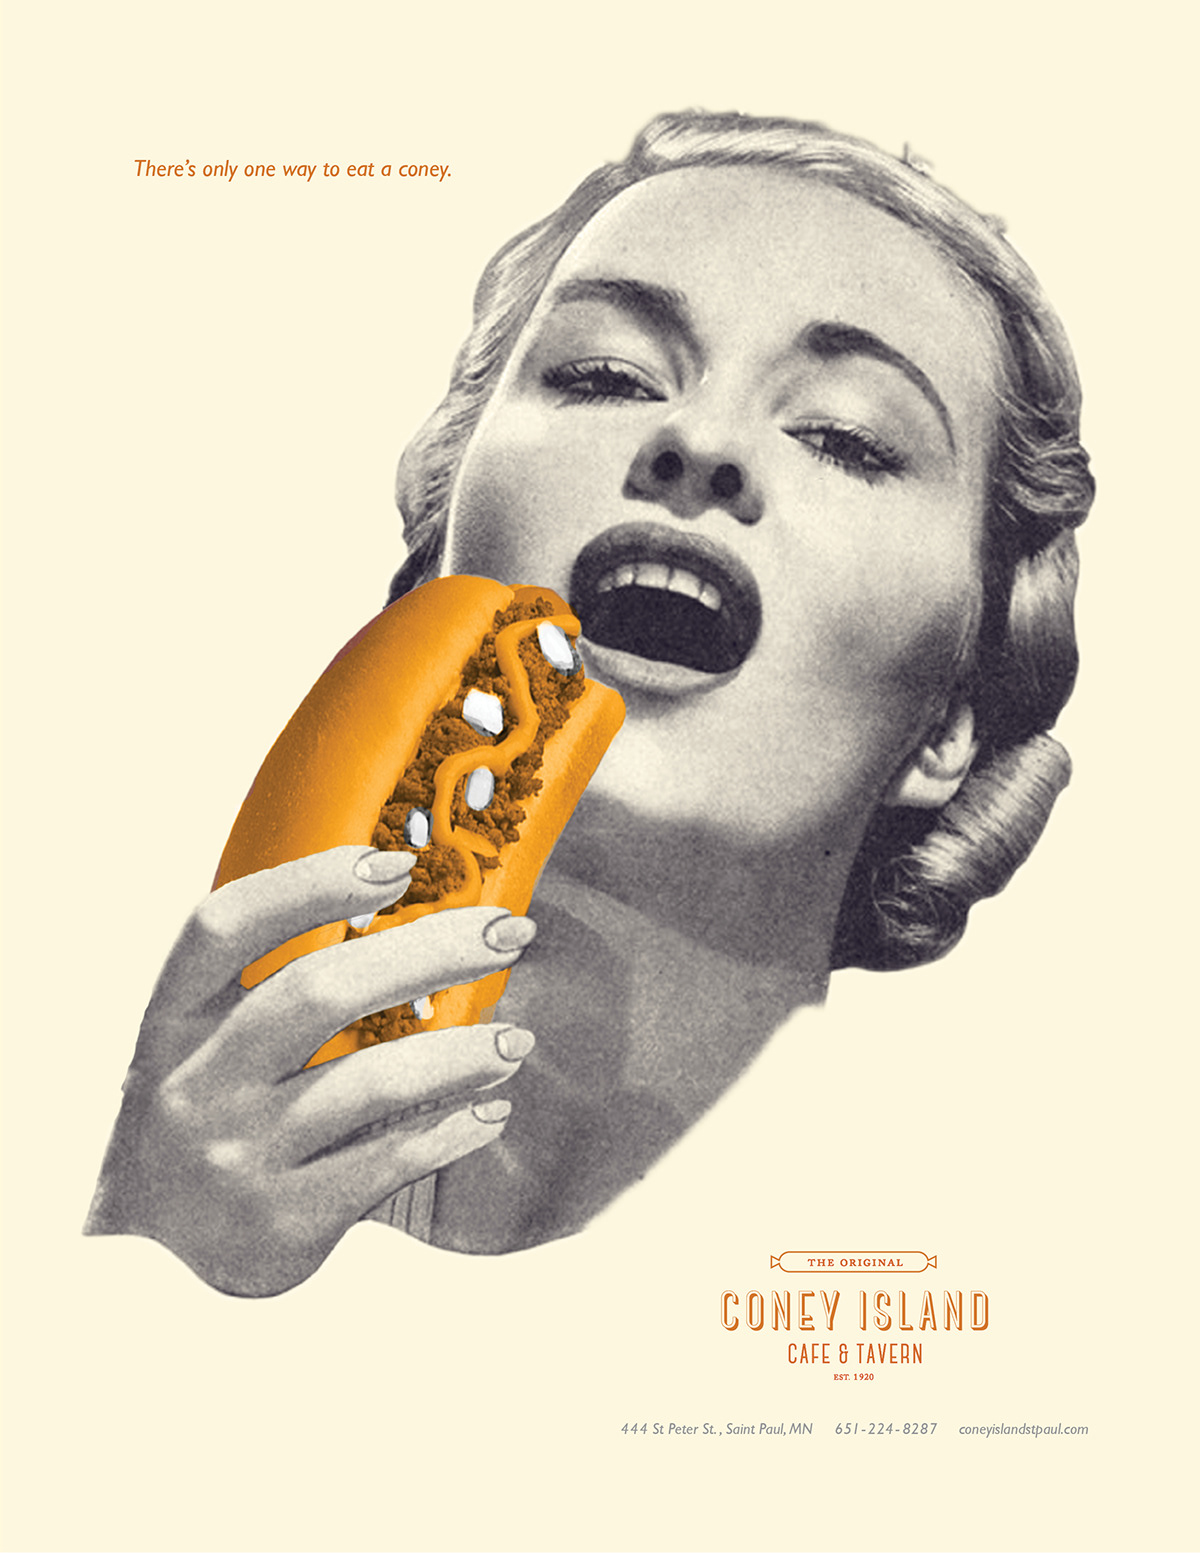 restaurant ad campaign cafe Tavern Coney hot dog vintage advertisement